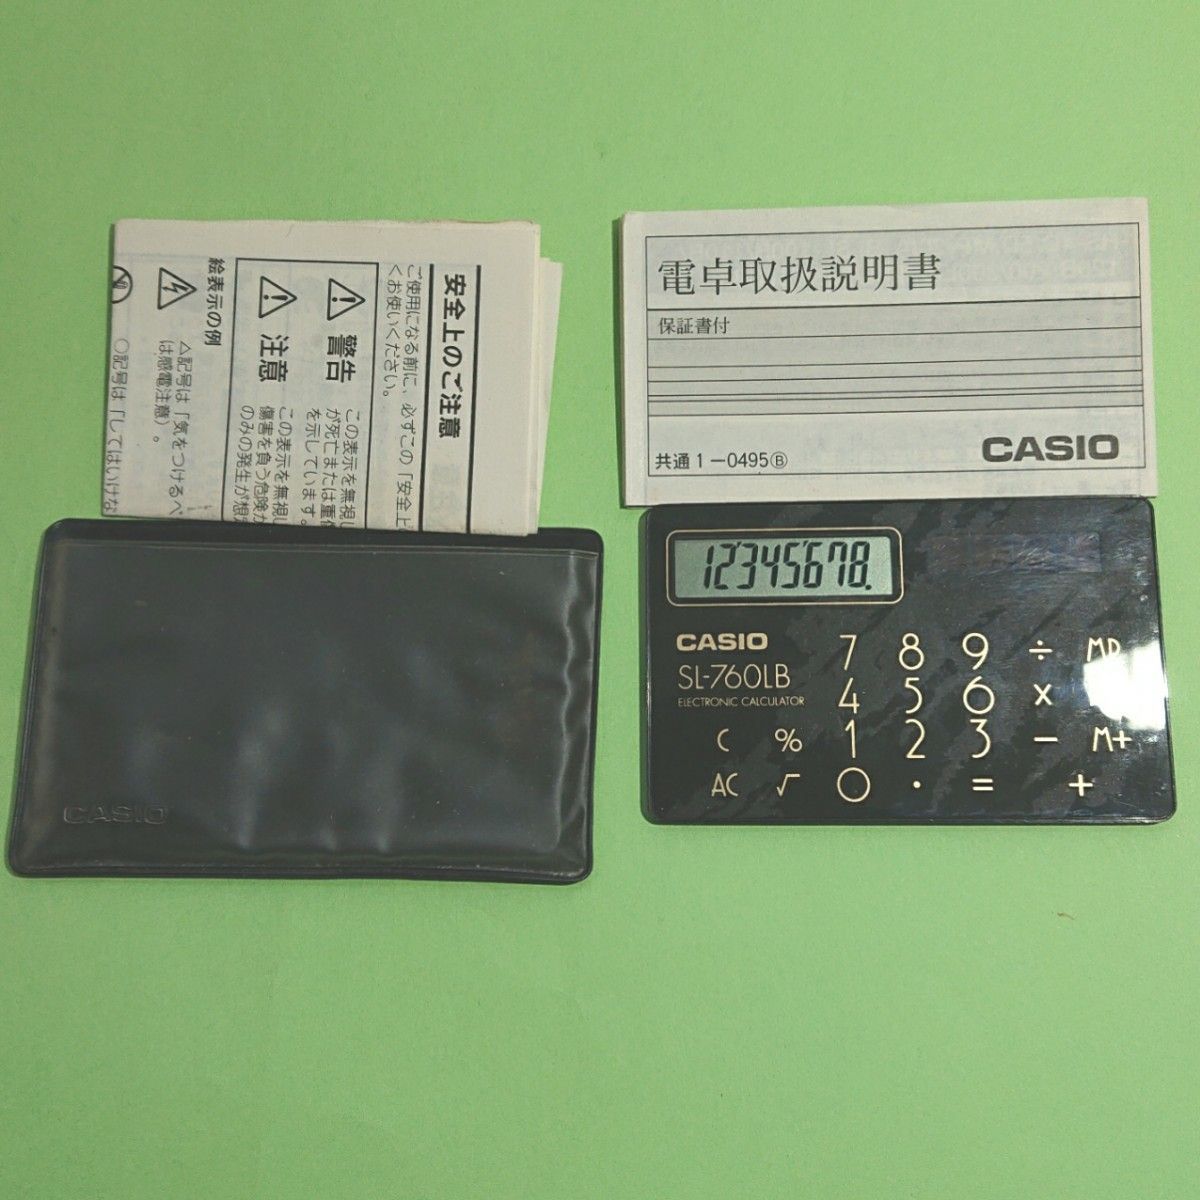 CASIOカードタイプソーラー電卓 SL-760LB